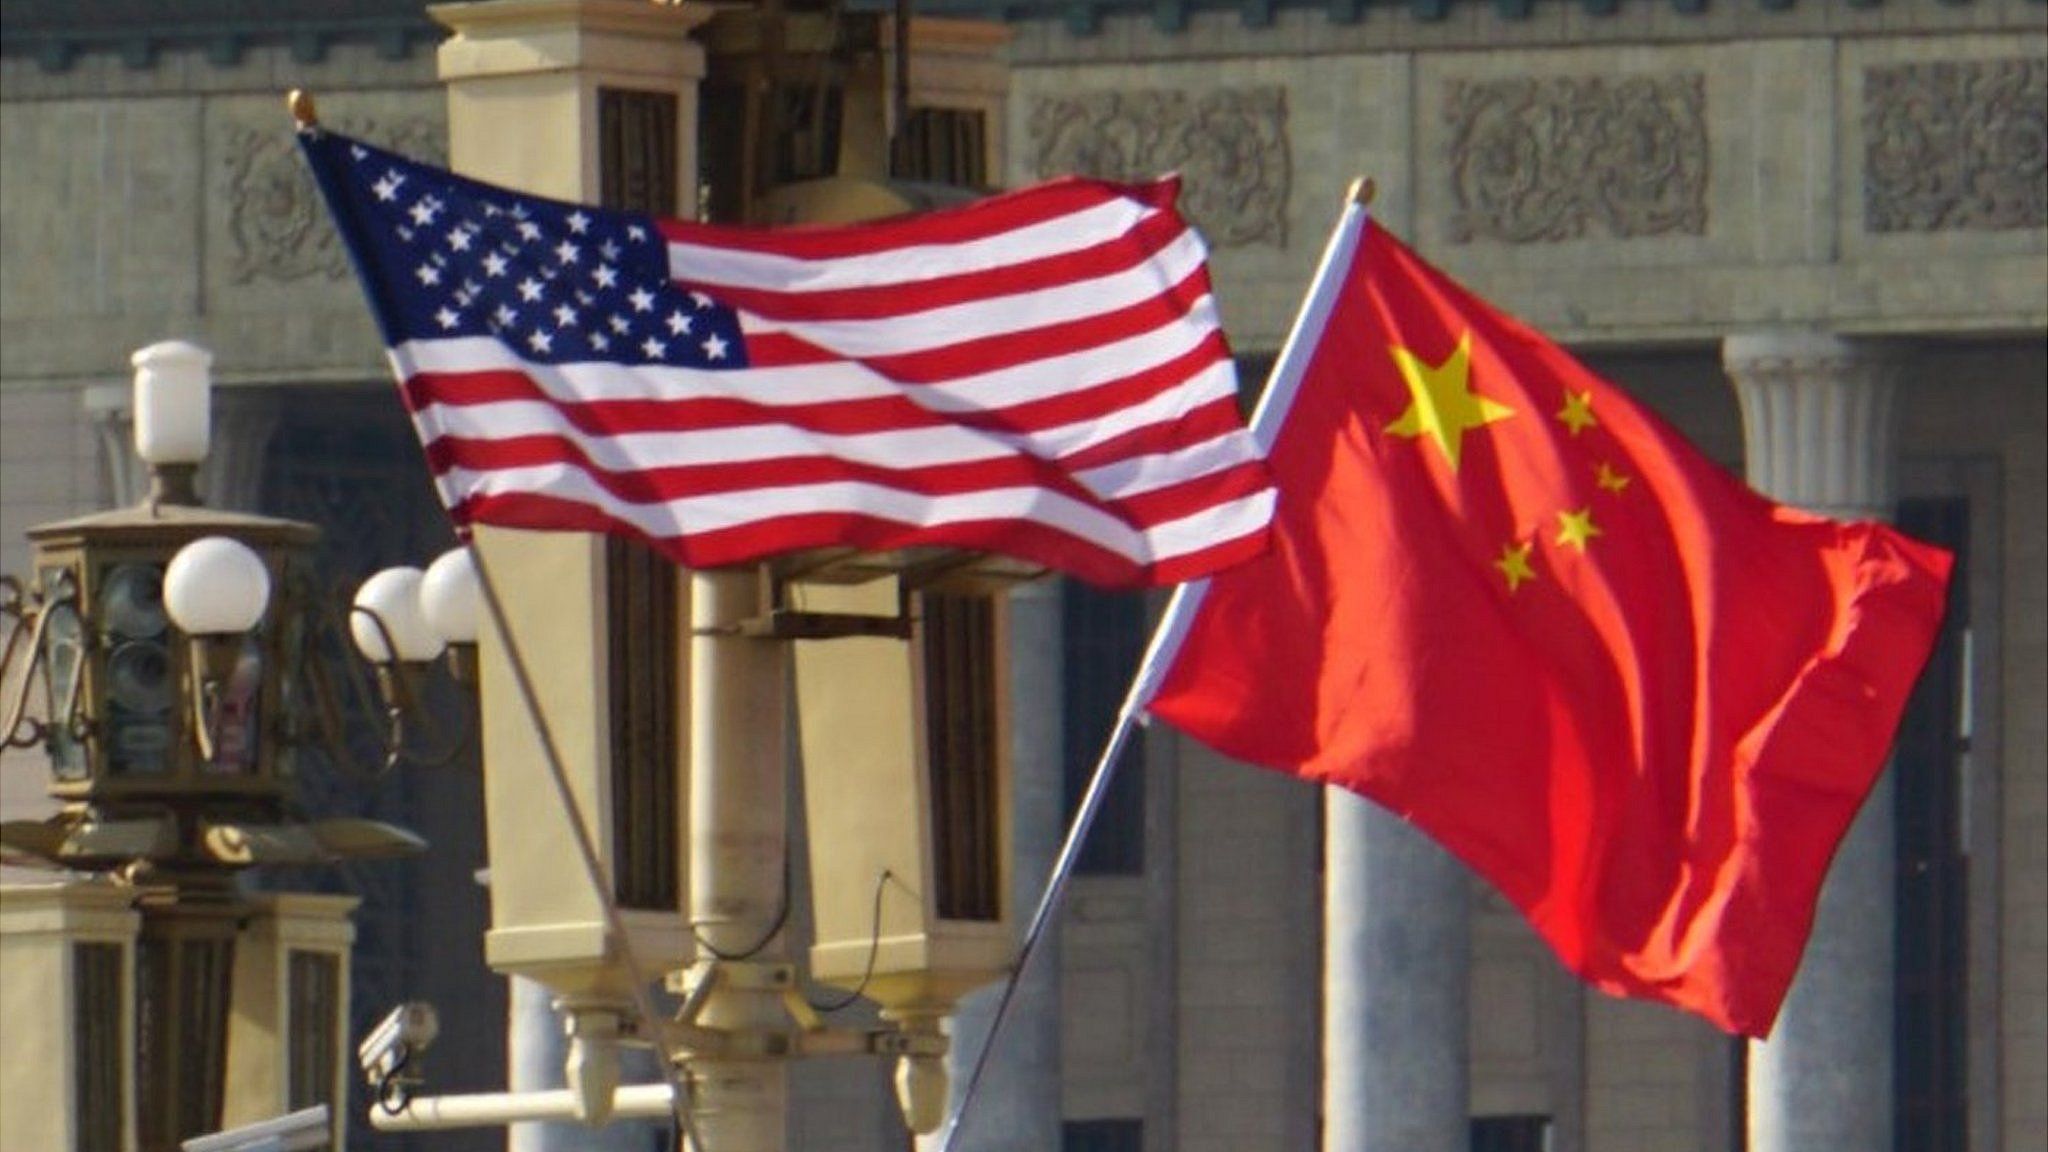 USA and China flags